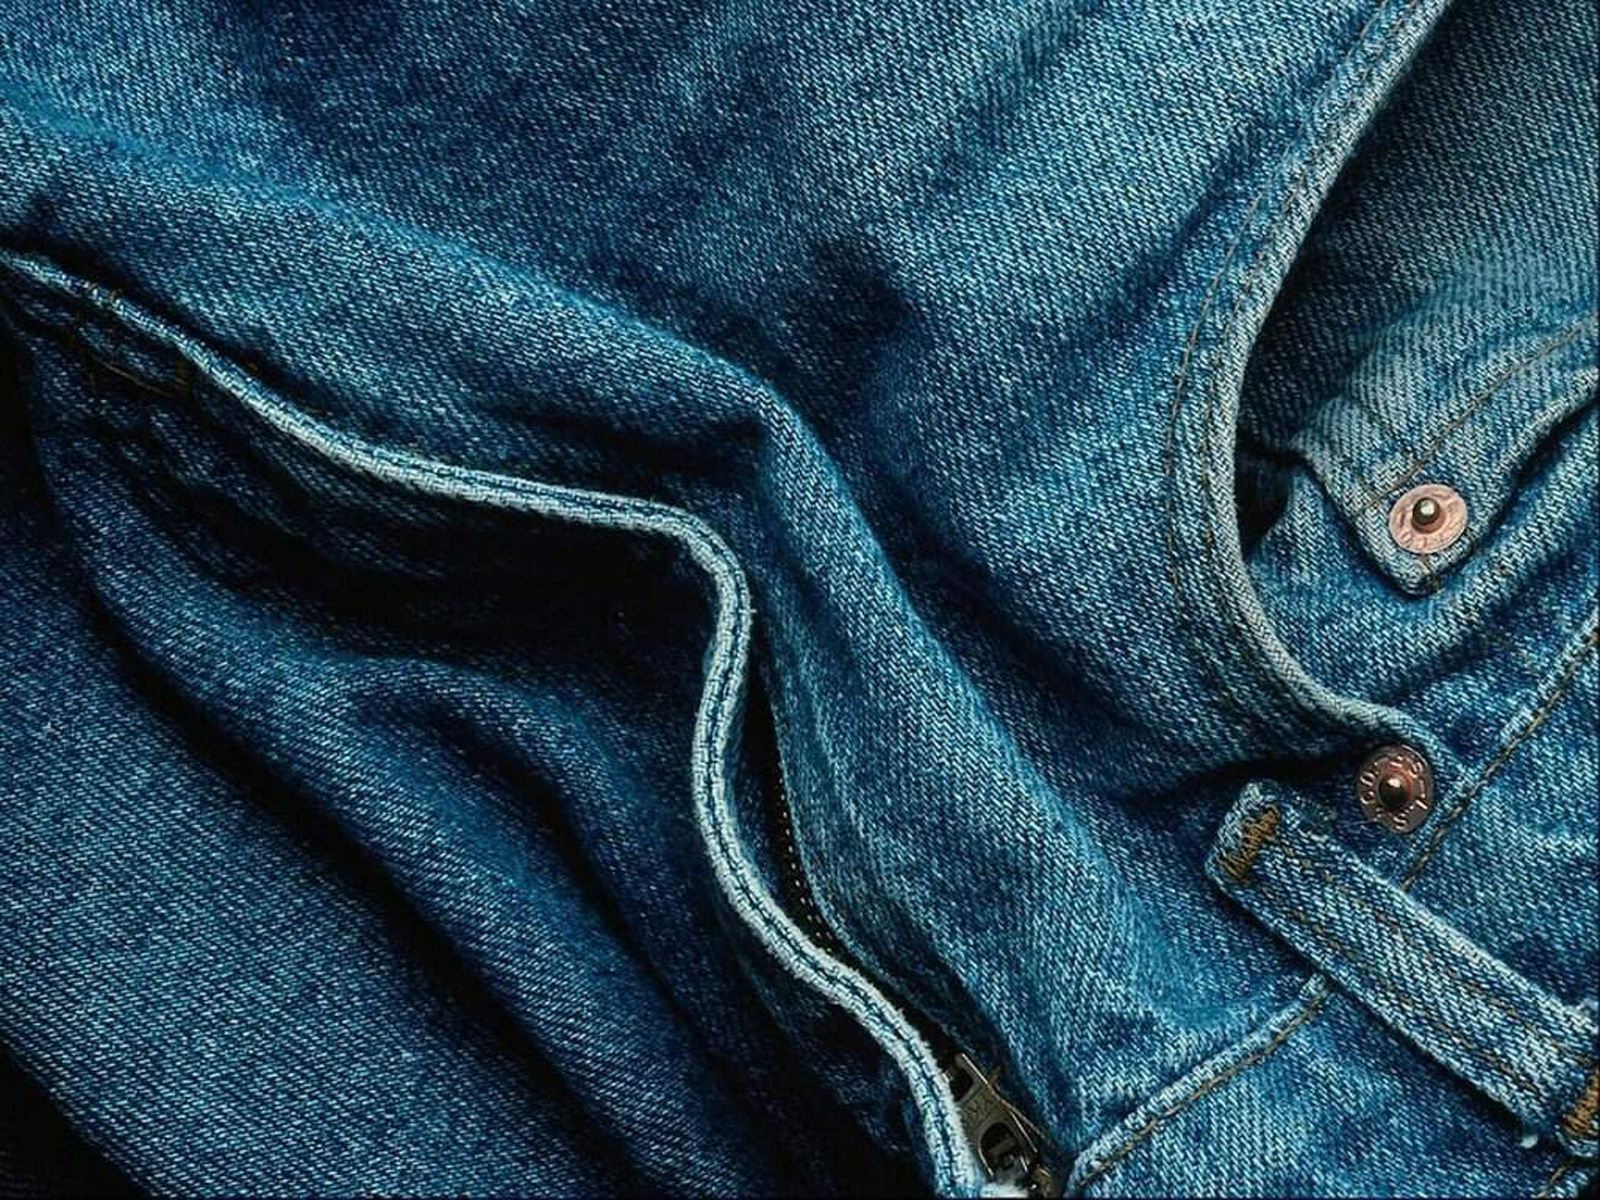 jeans wallpaper hd,denim,jeans,blue,clothing,pocket